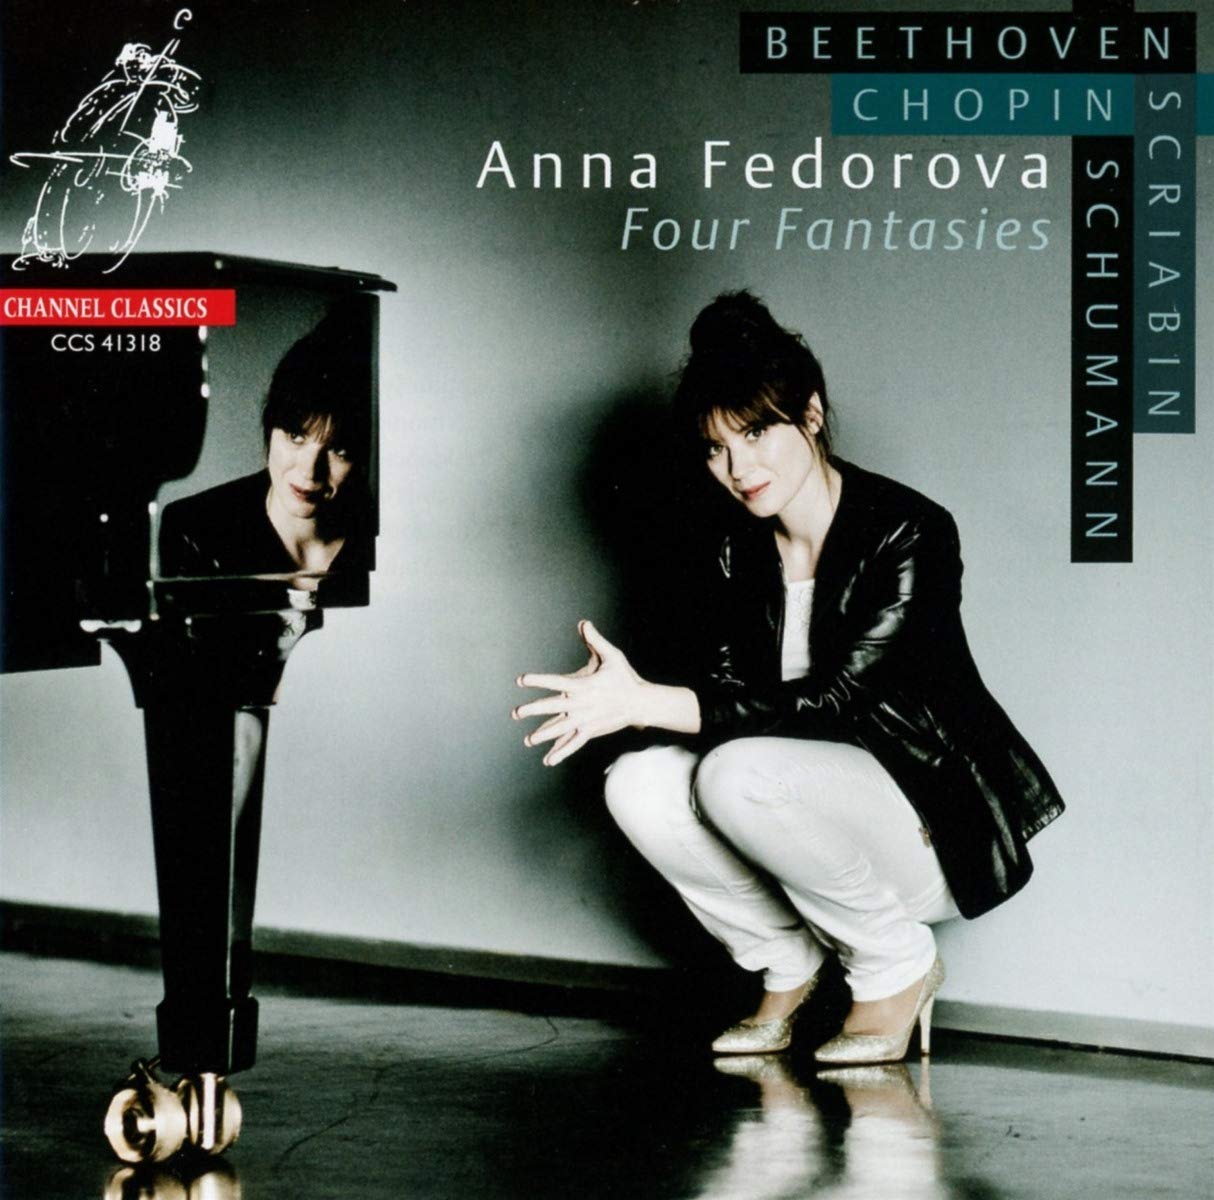 Anna Fedorova – Four Fantasies, Channel Classics CCS 41318